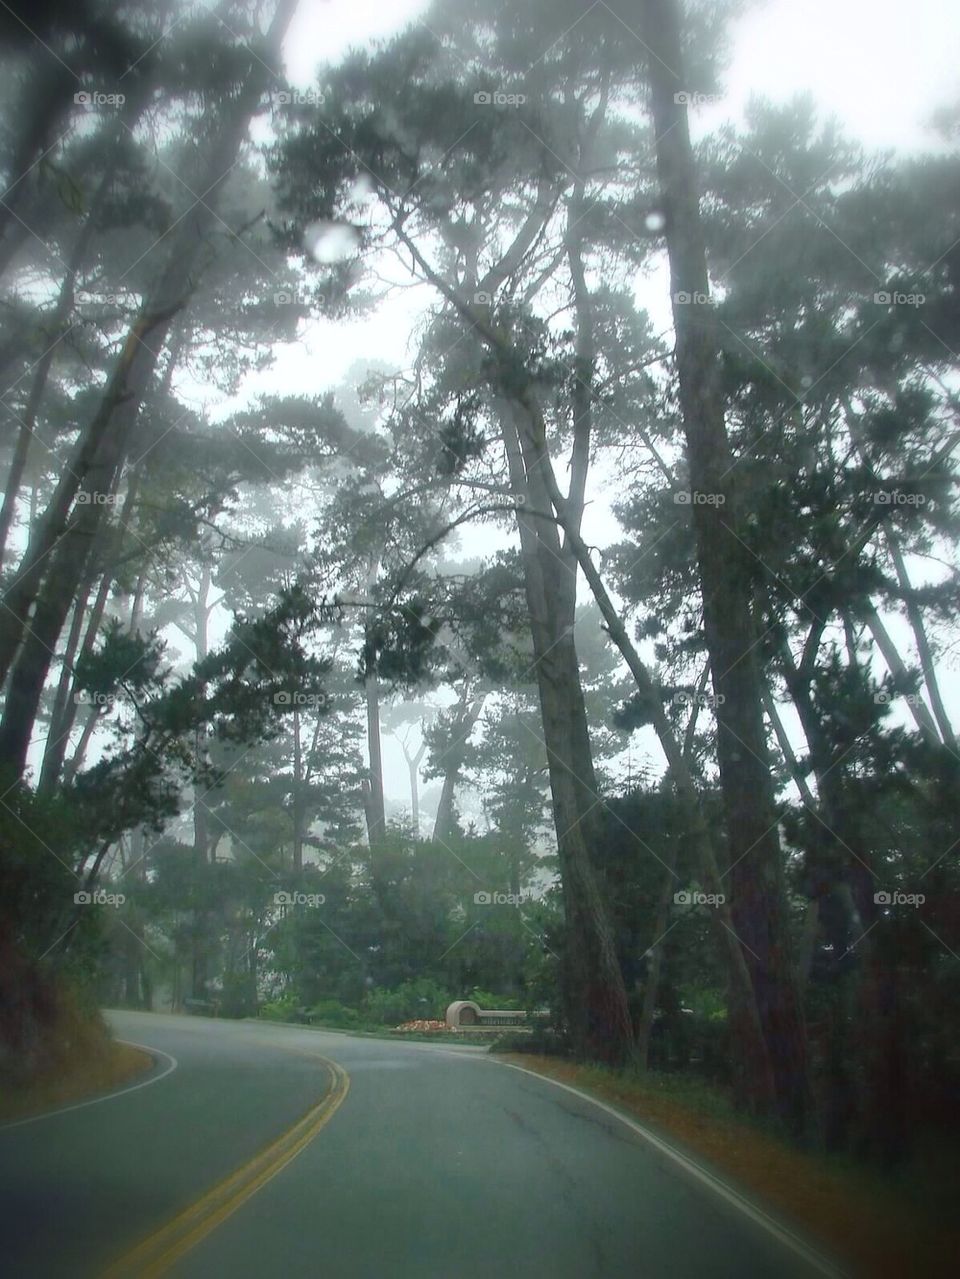 Follow the foggy road